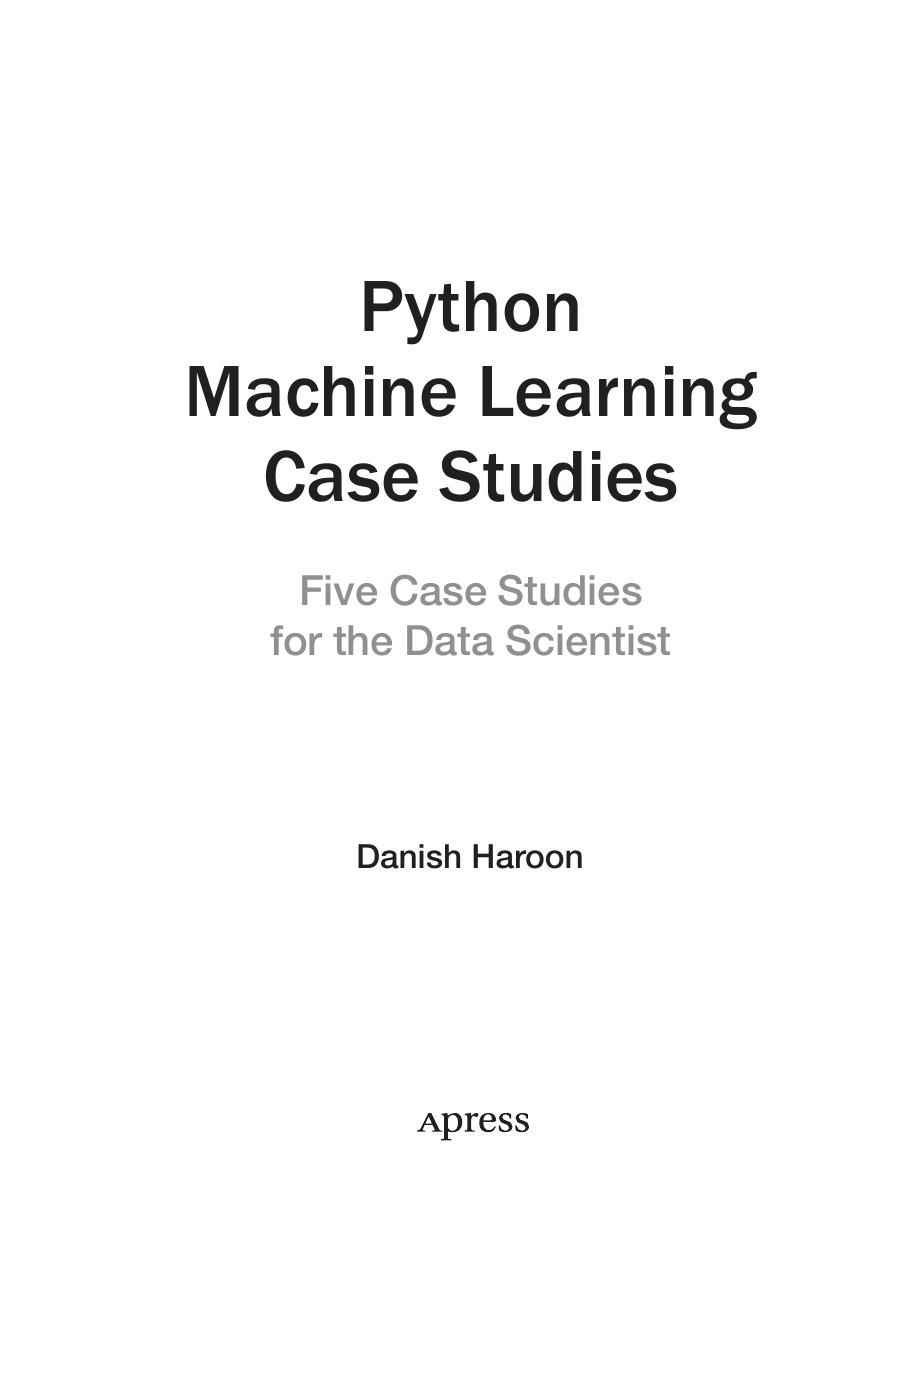 Python Machine Learning Case Studies by Danish Haroon